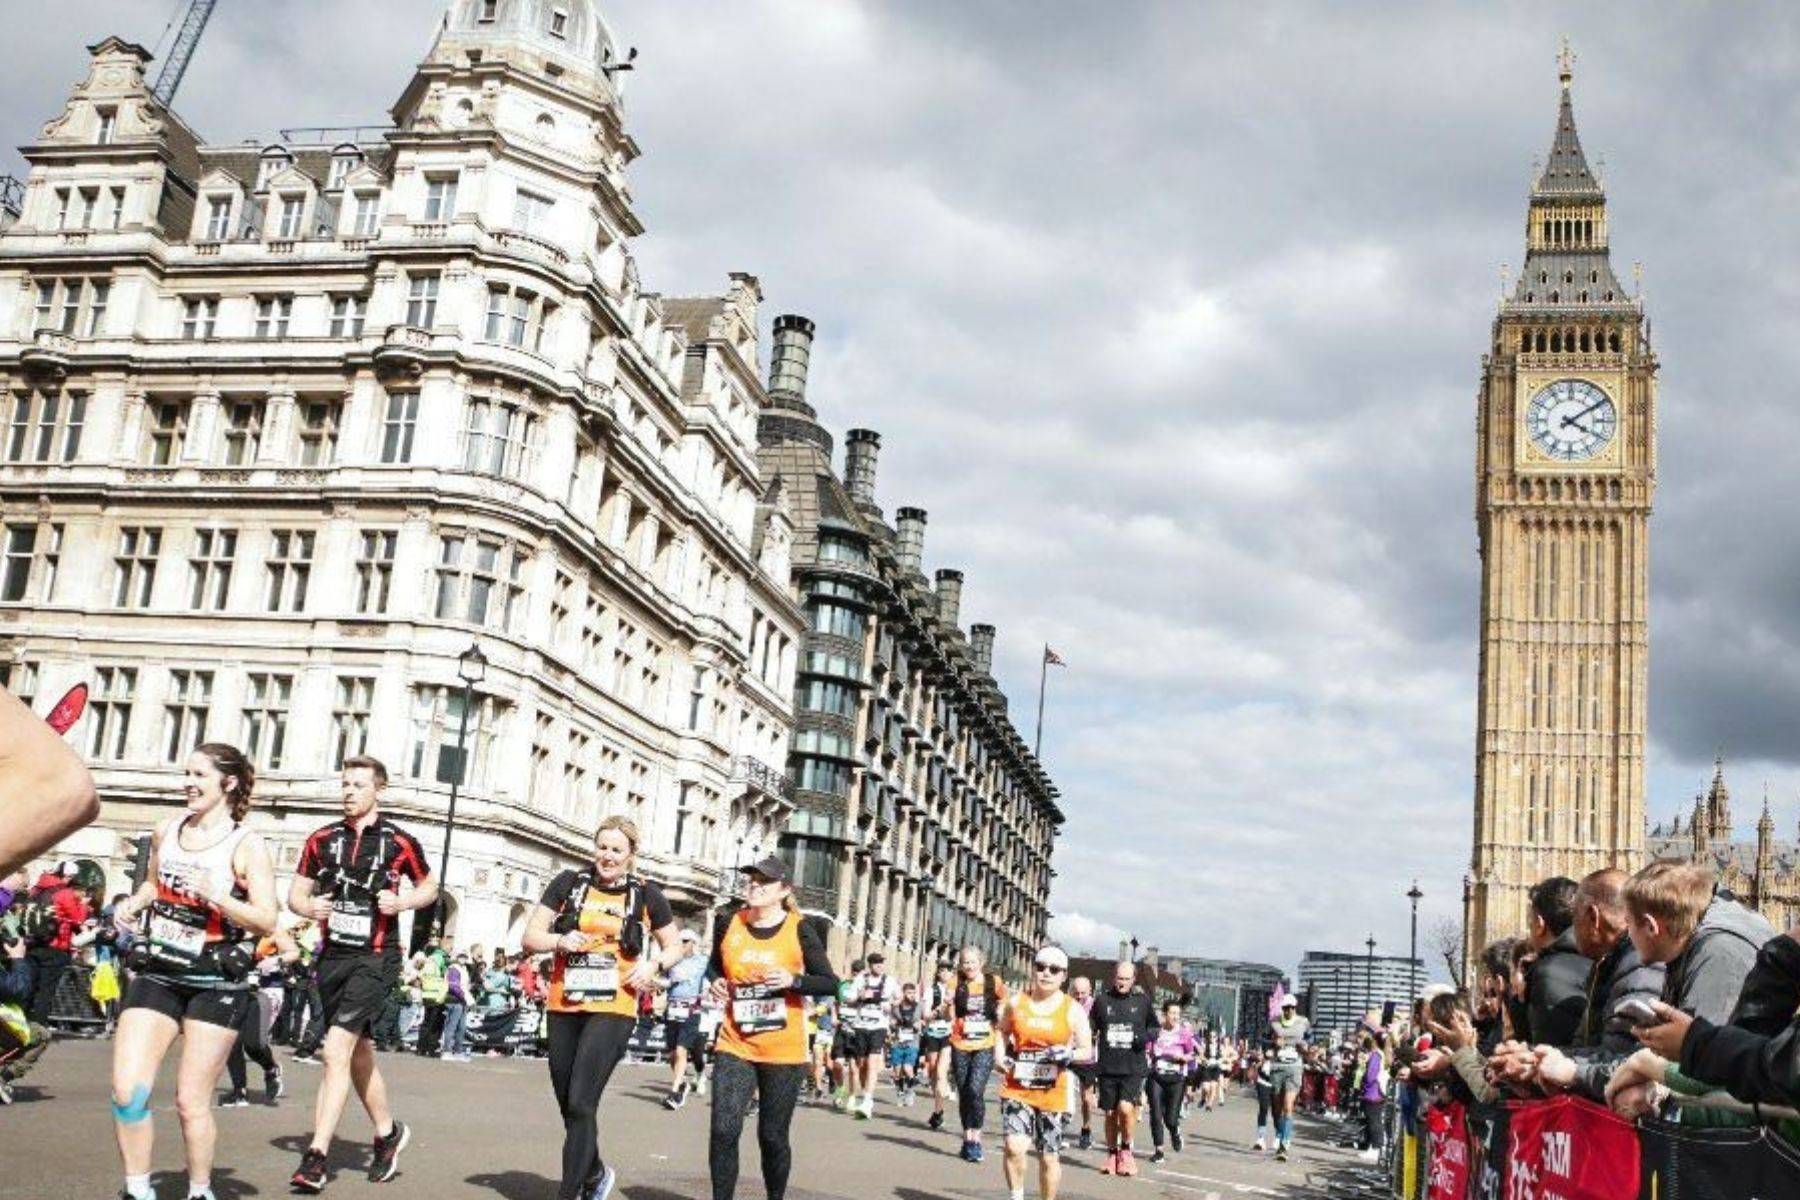  London Marathon runners are running past the Elizabeth Tower